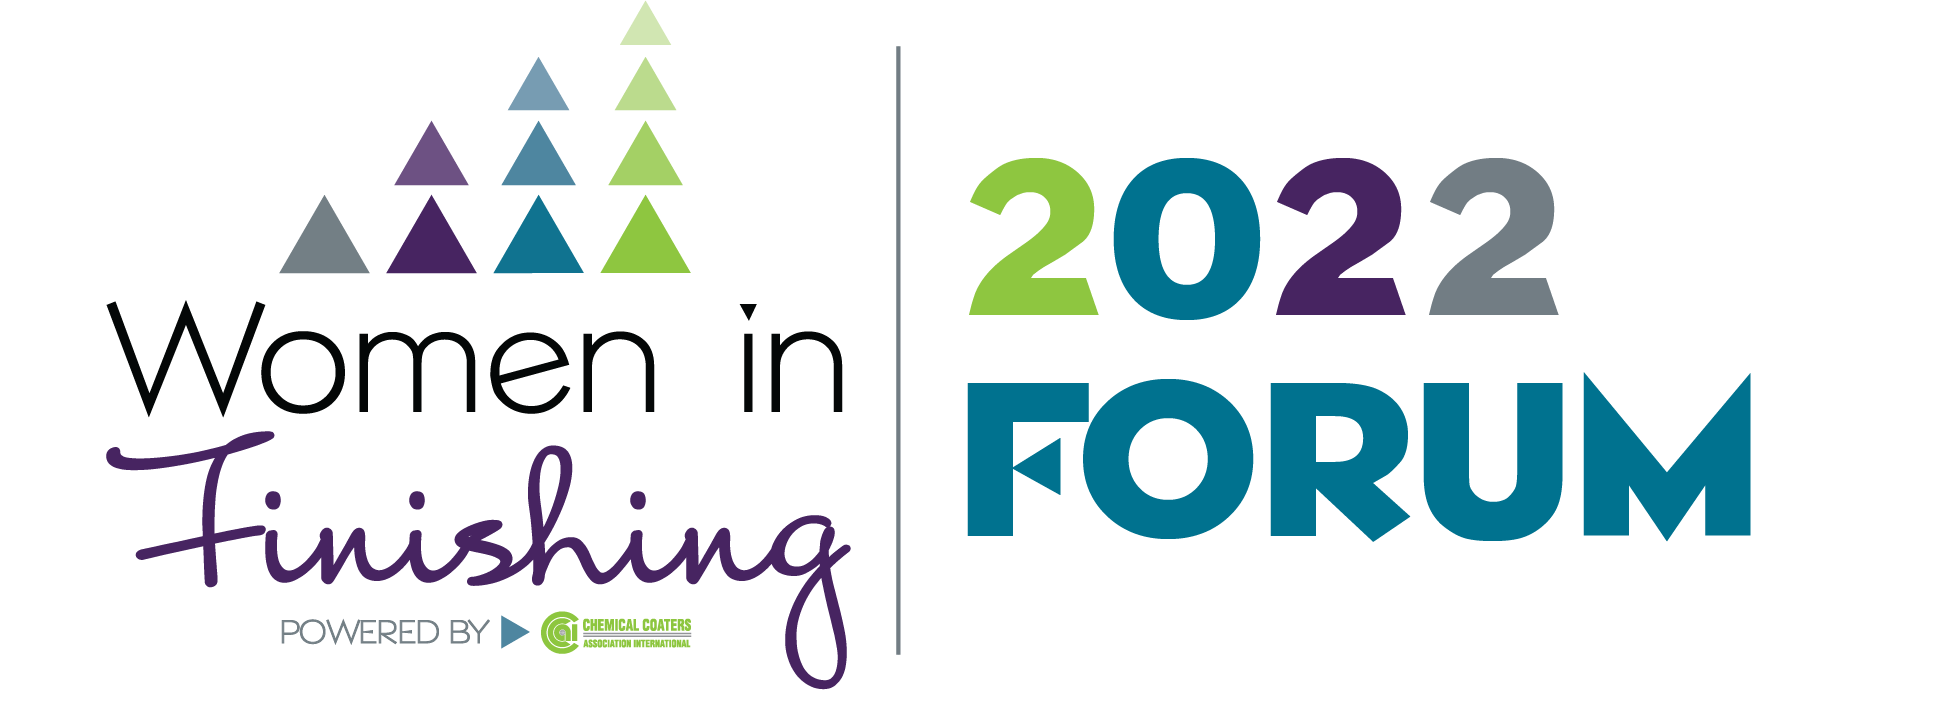 2022 Women in Finishing FORUM Logo